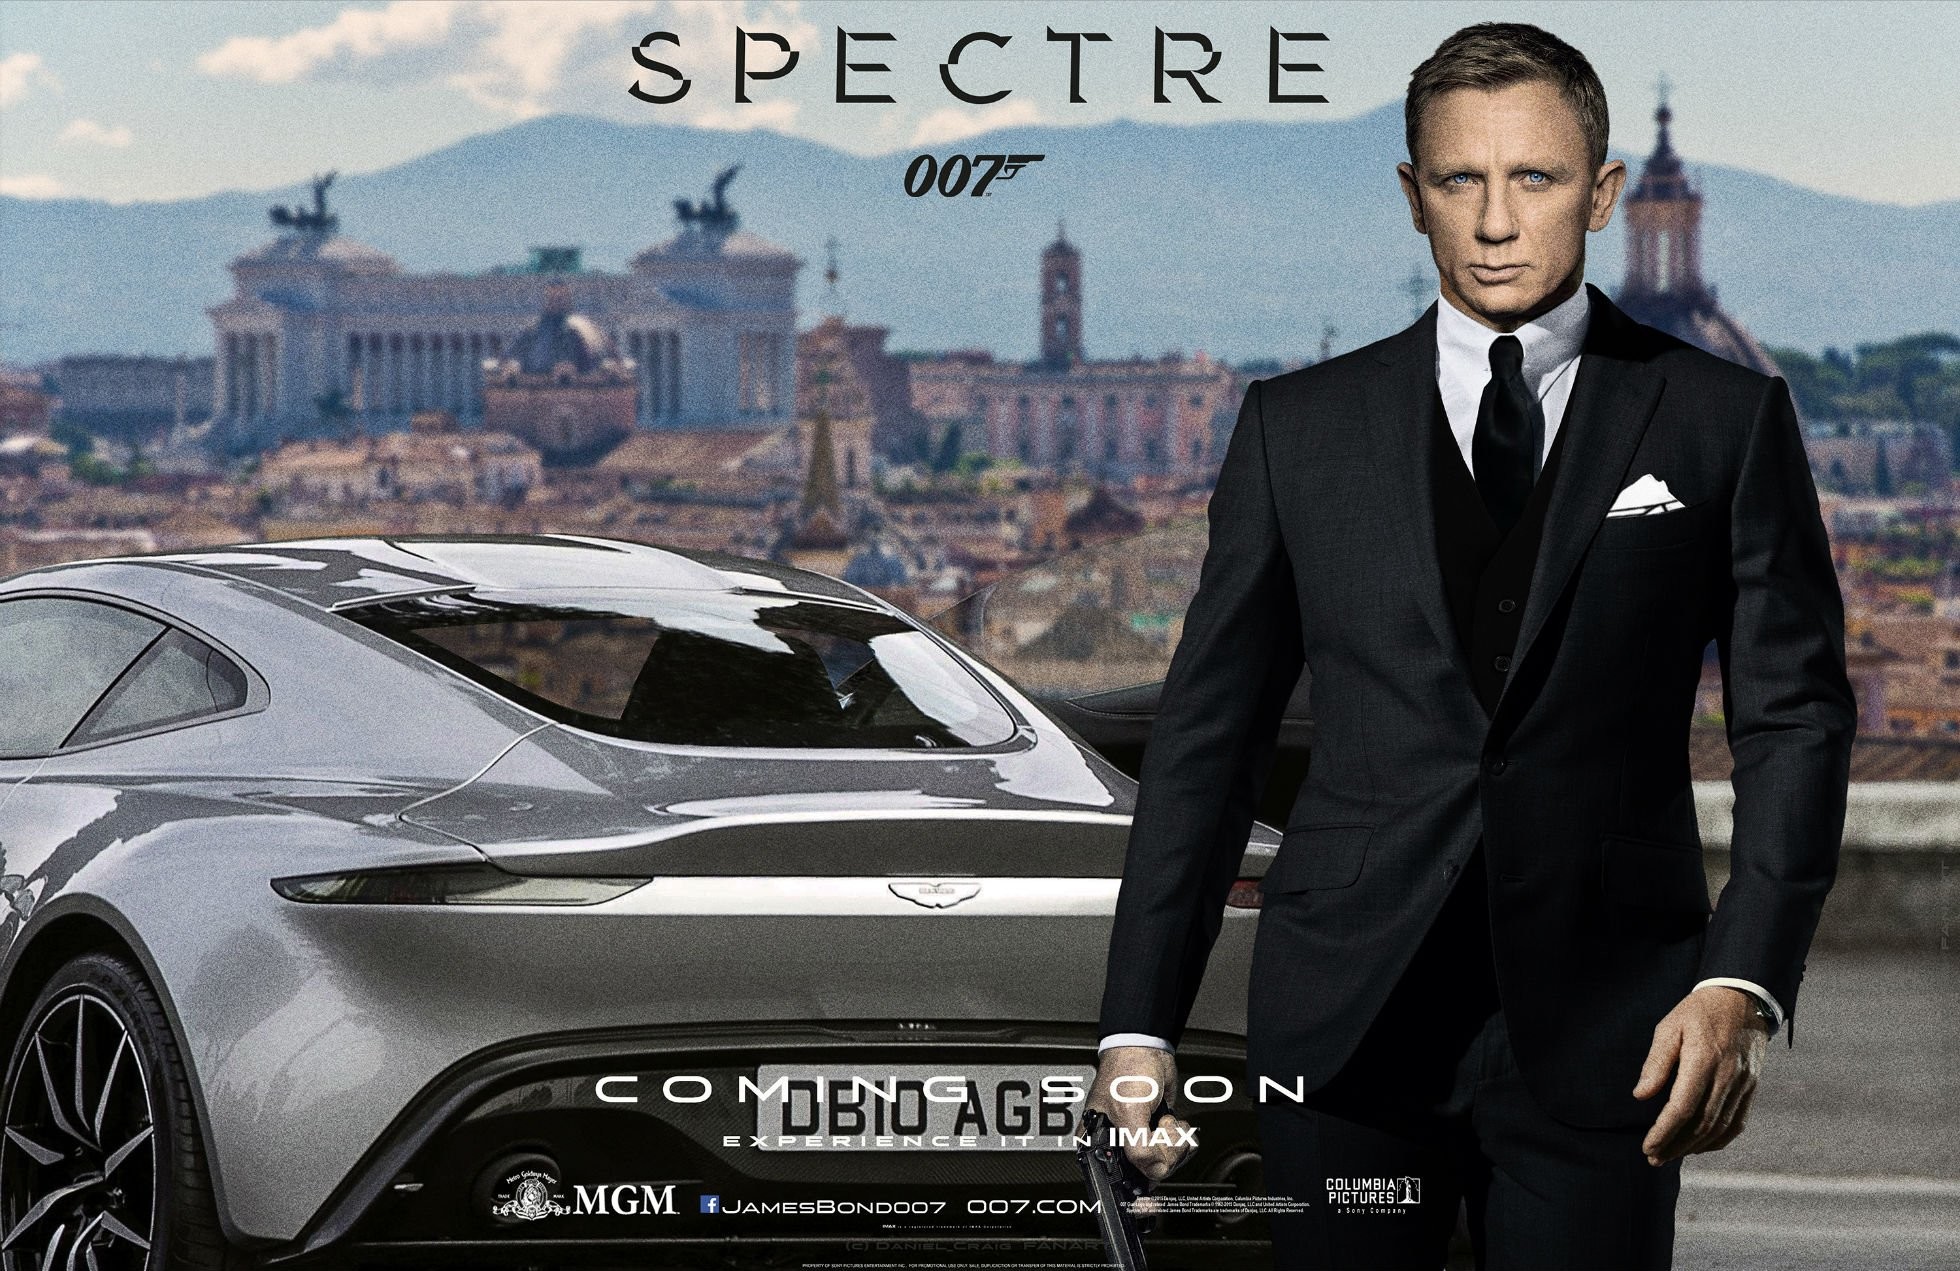 1960x1271 SPECTRE 007 BOND 24 james action spy crime thriller 1spectre mystery poster  wallpaper |  | 762665 | WallpaperUP